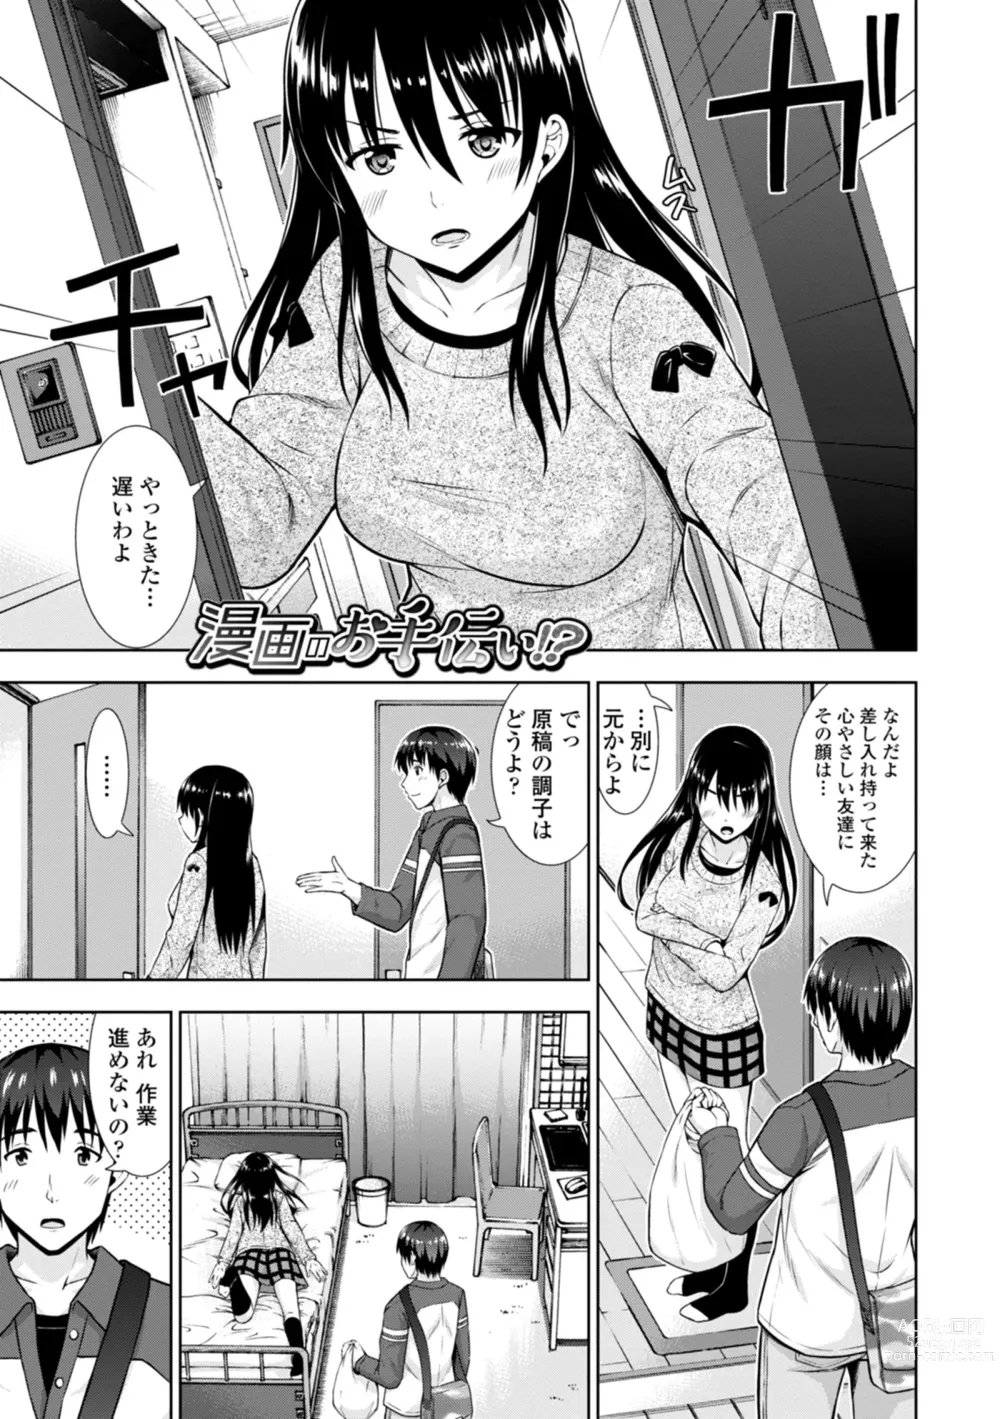 Page 3 of manga Onnanoko datte H Shitaku Narundamon.